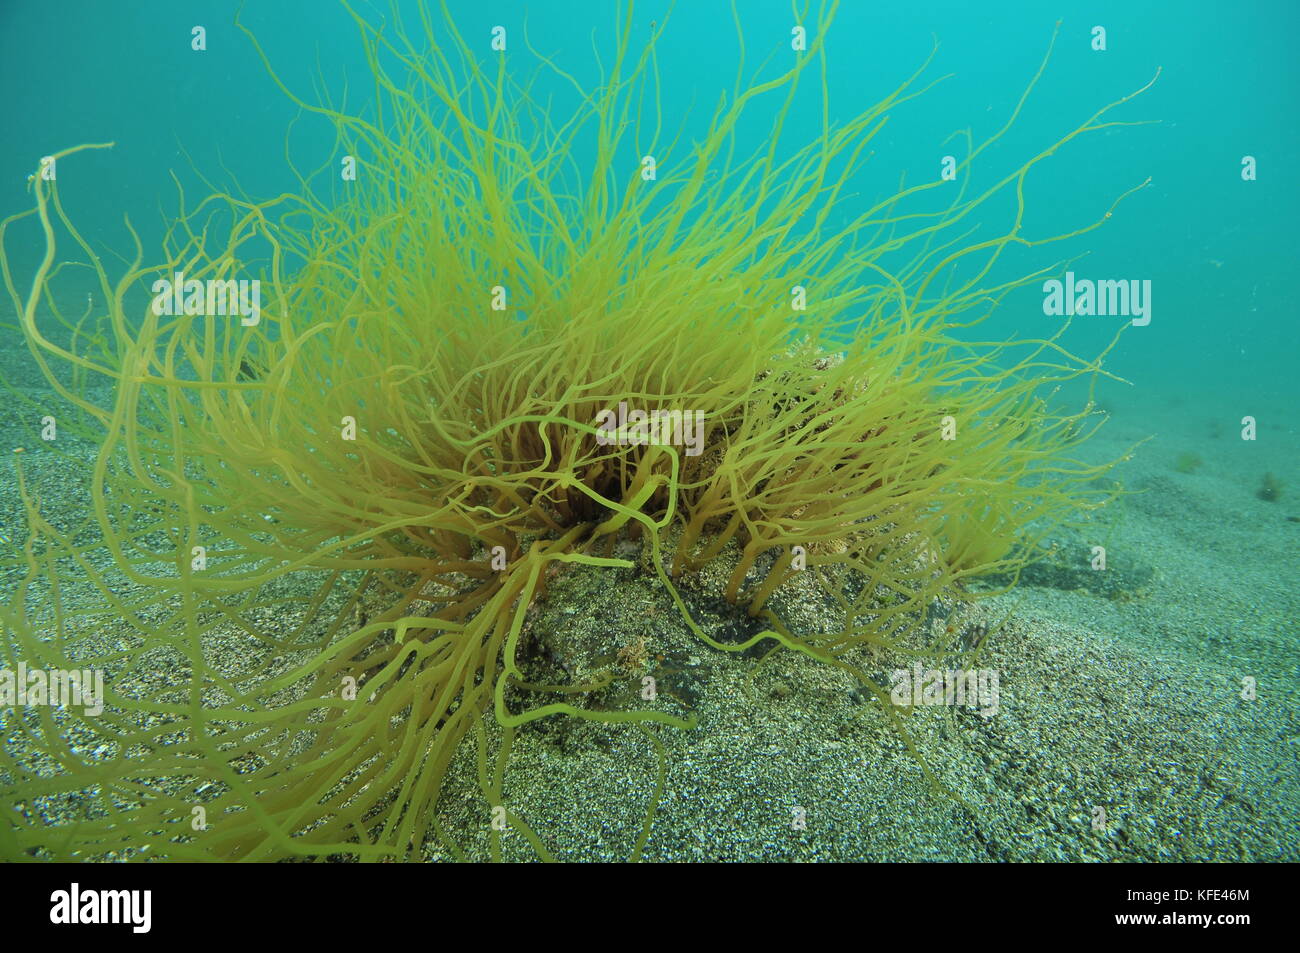 Bush of pale yellow to green colored seaweed on sandy sea bottom. Stock Photo